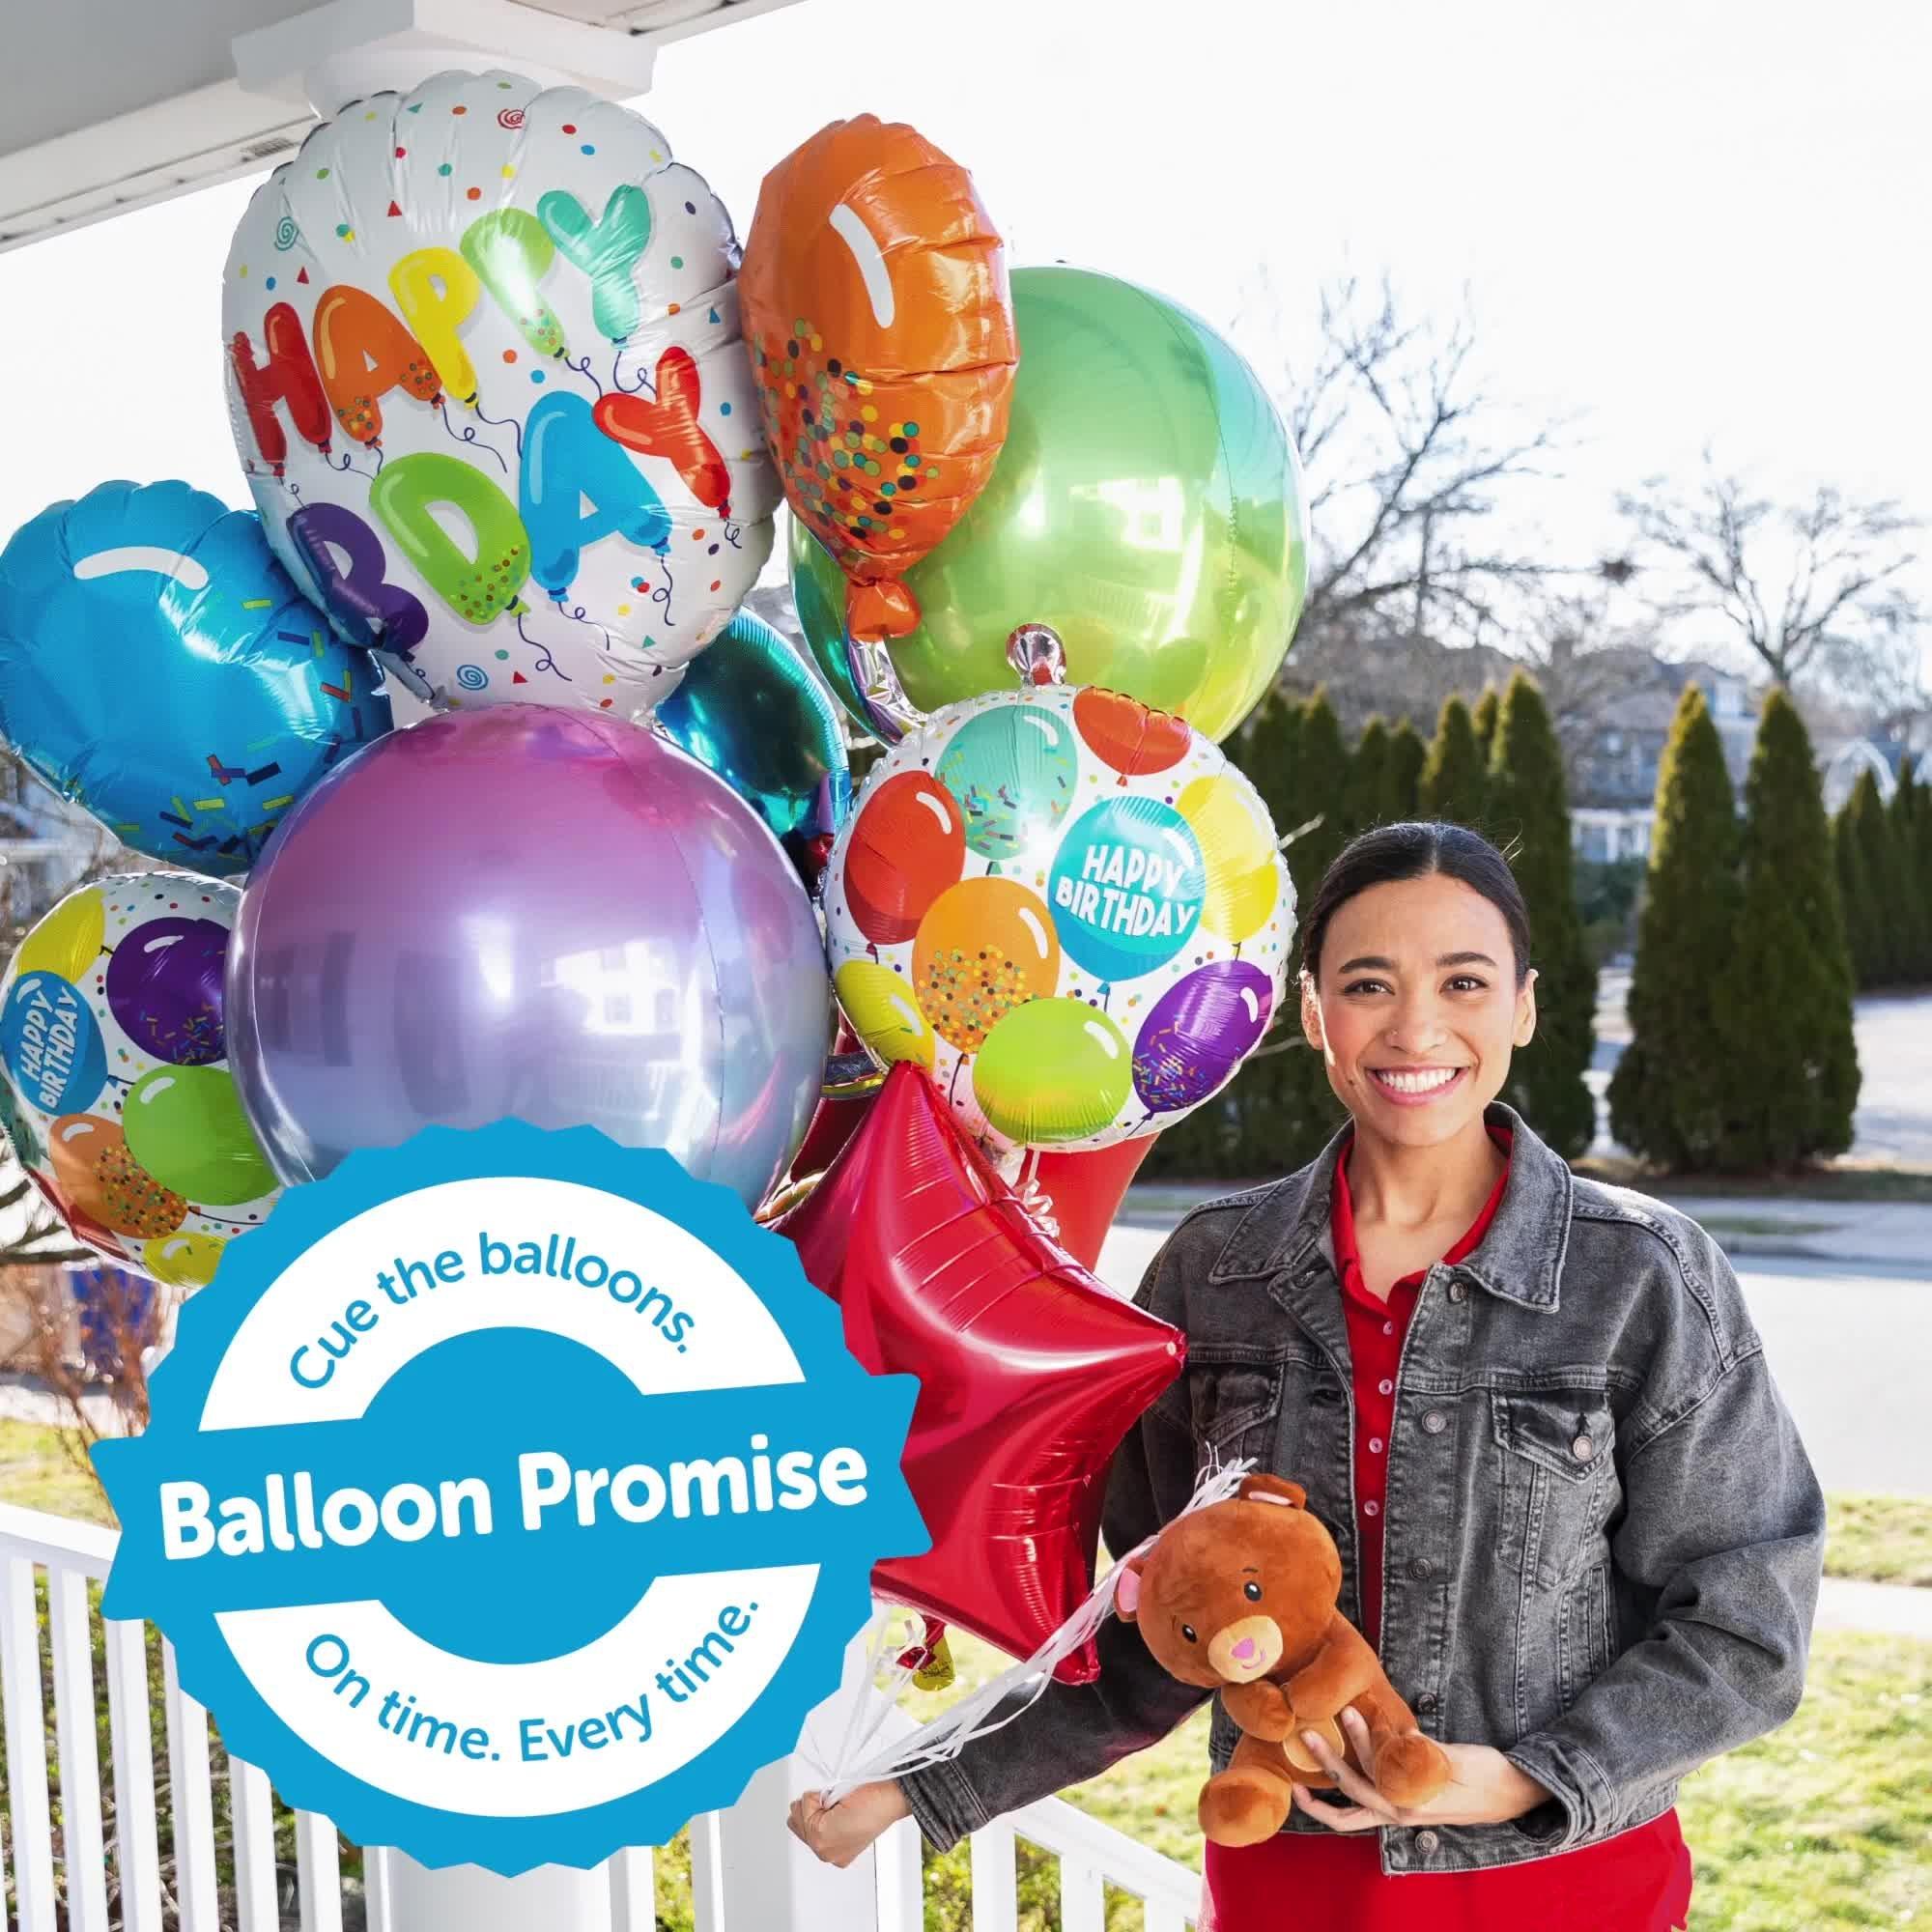 Premium Sparkling Celebration Birthday Foil Balloon Bouquet with Balloon Weight, 13pc